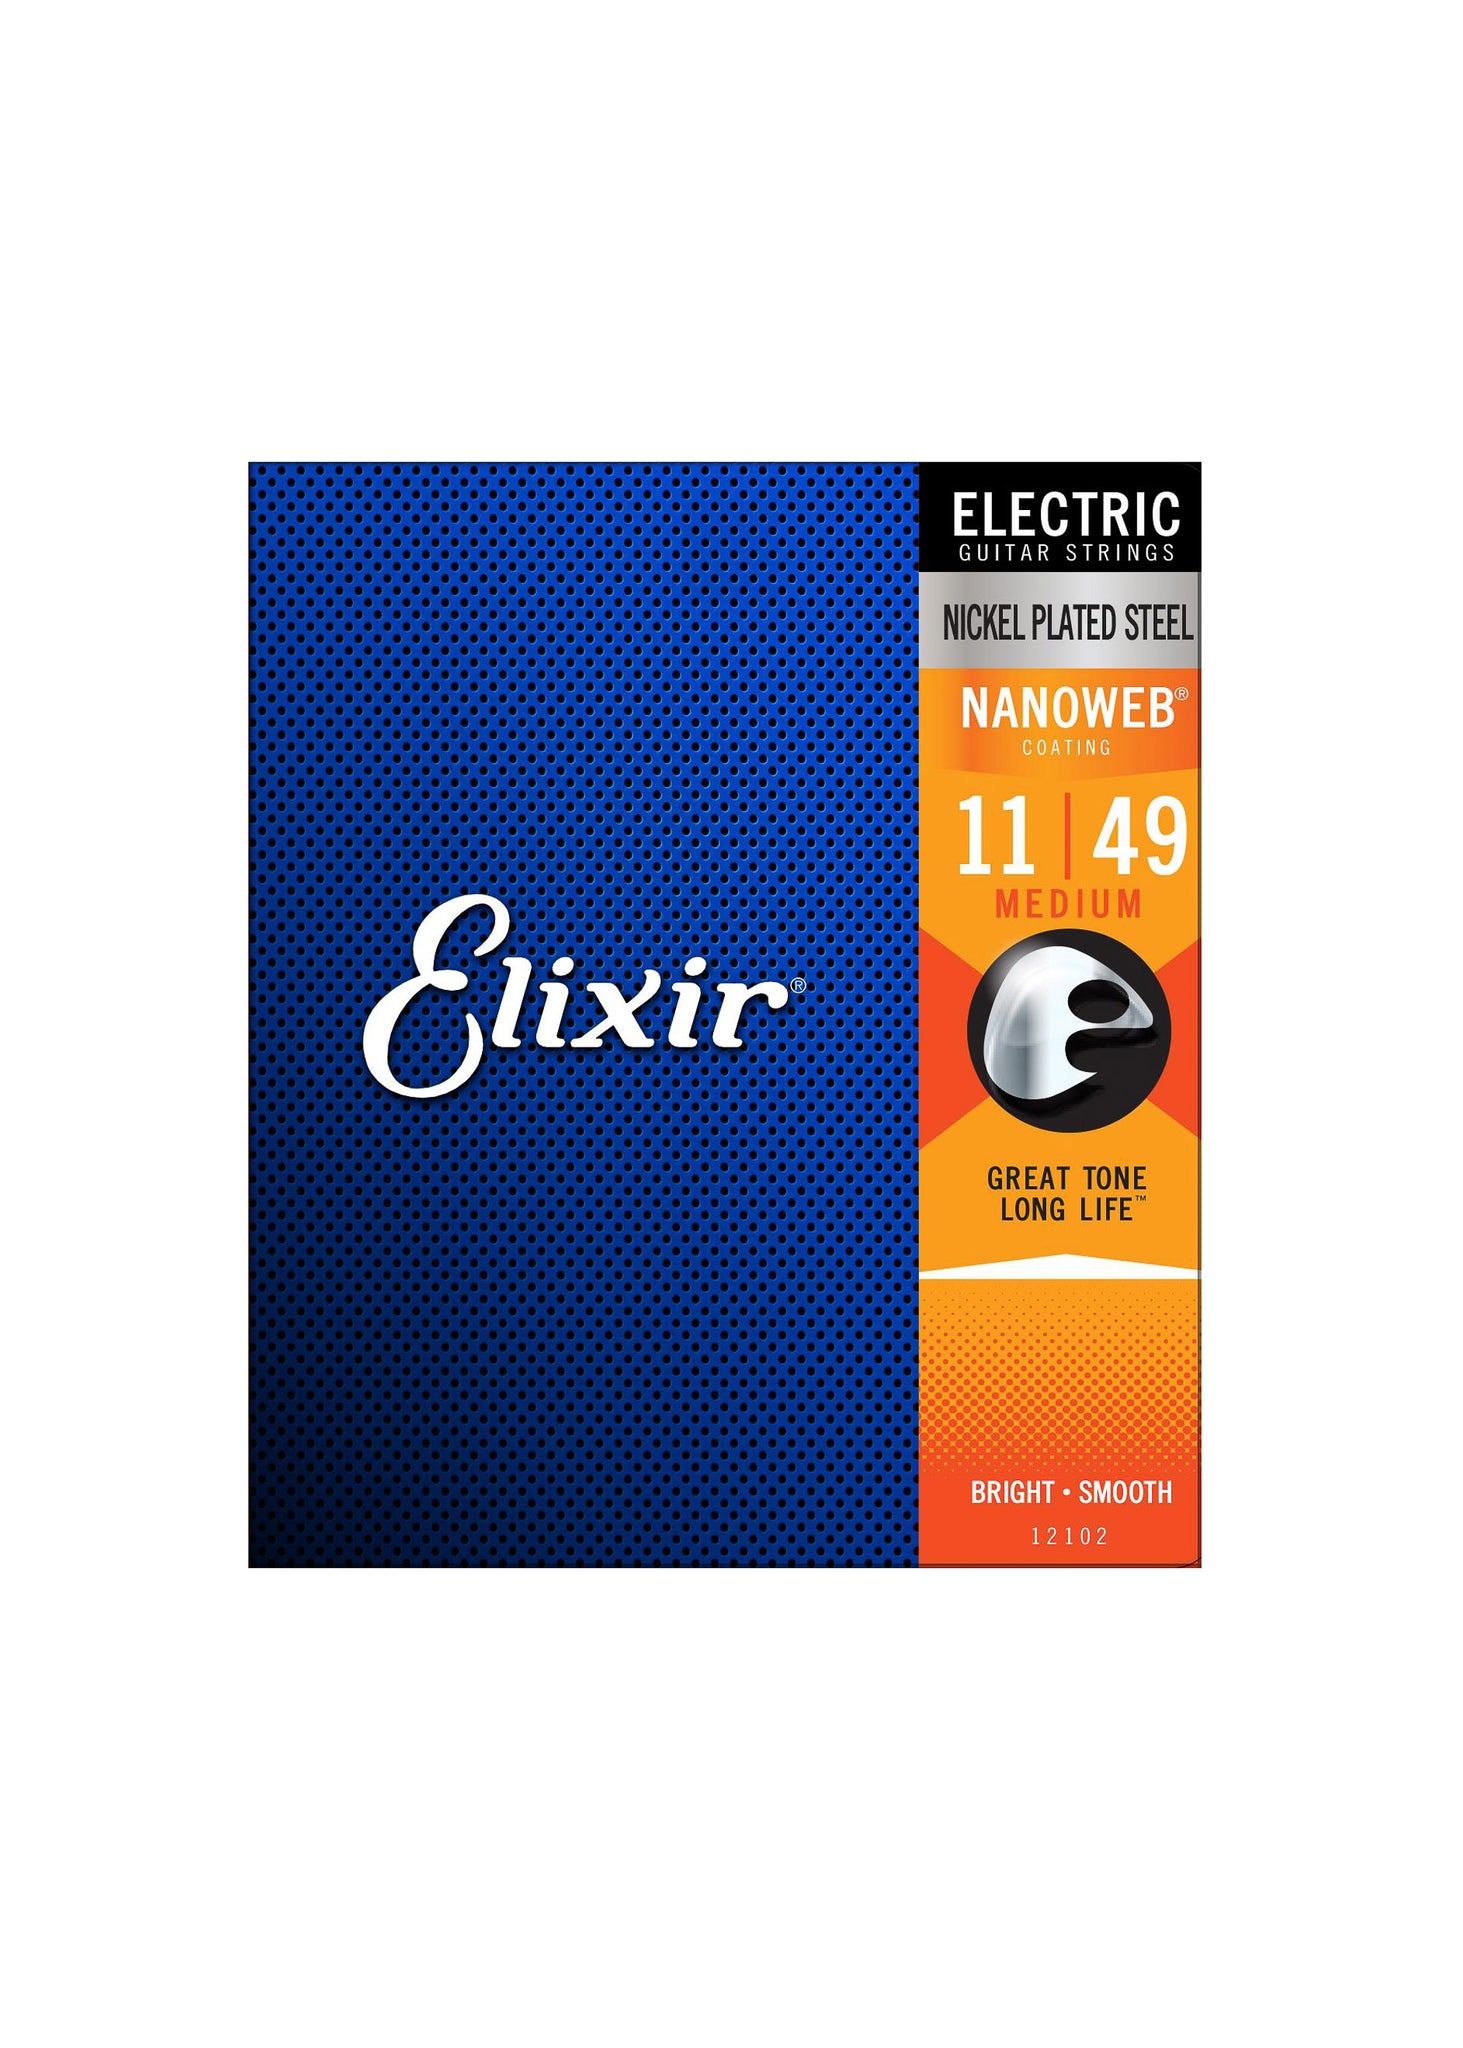 Elixir Nanoweb Electric Guitar Strings, Medium, 11-49